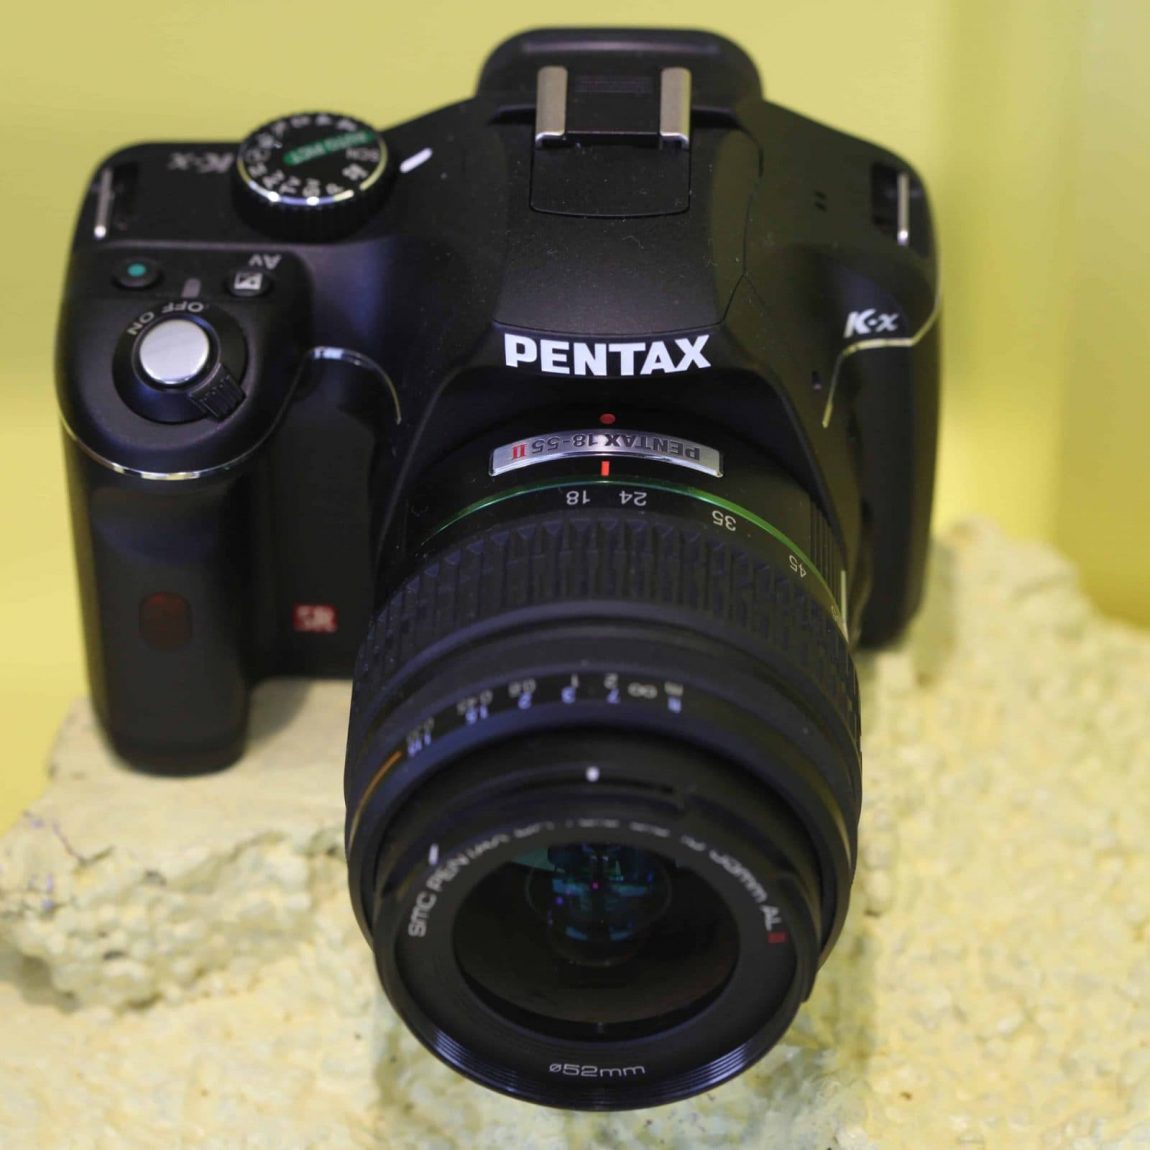 Pentax K x IMG 2159 scaled